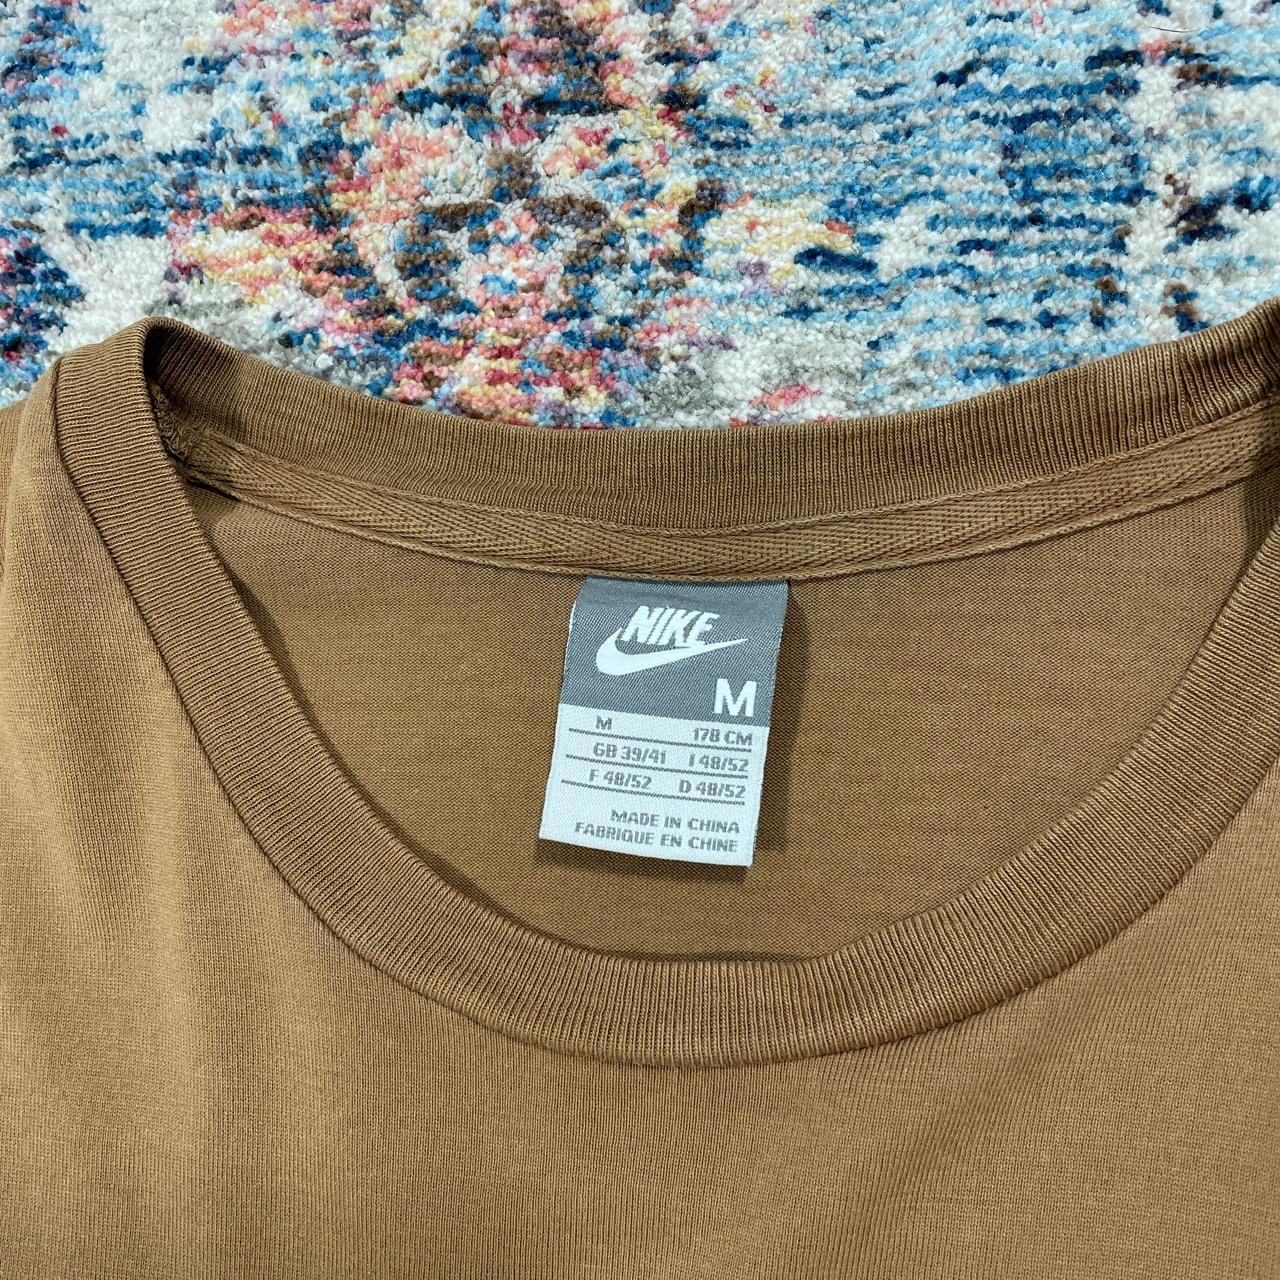 Vintage Nike Brown T-Shirt